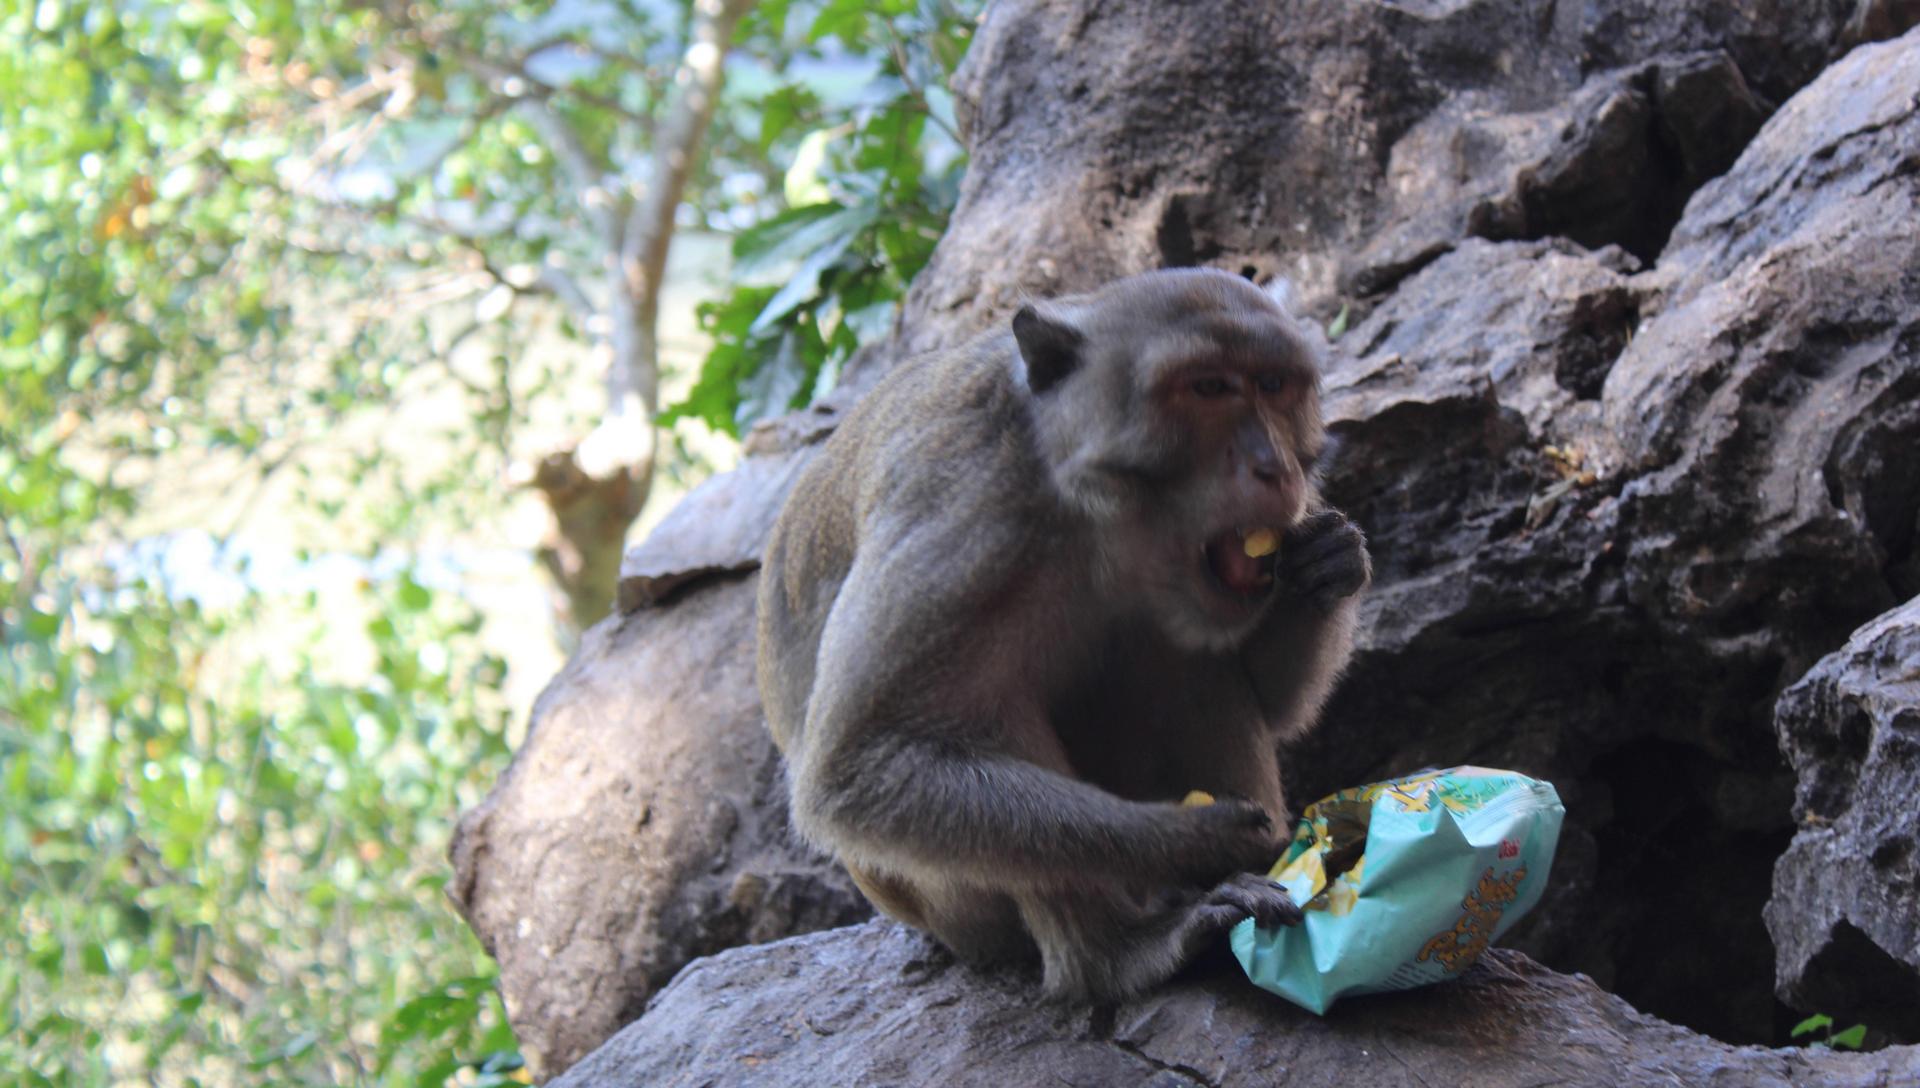 This monkey, who prefers human food.